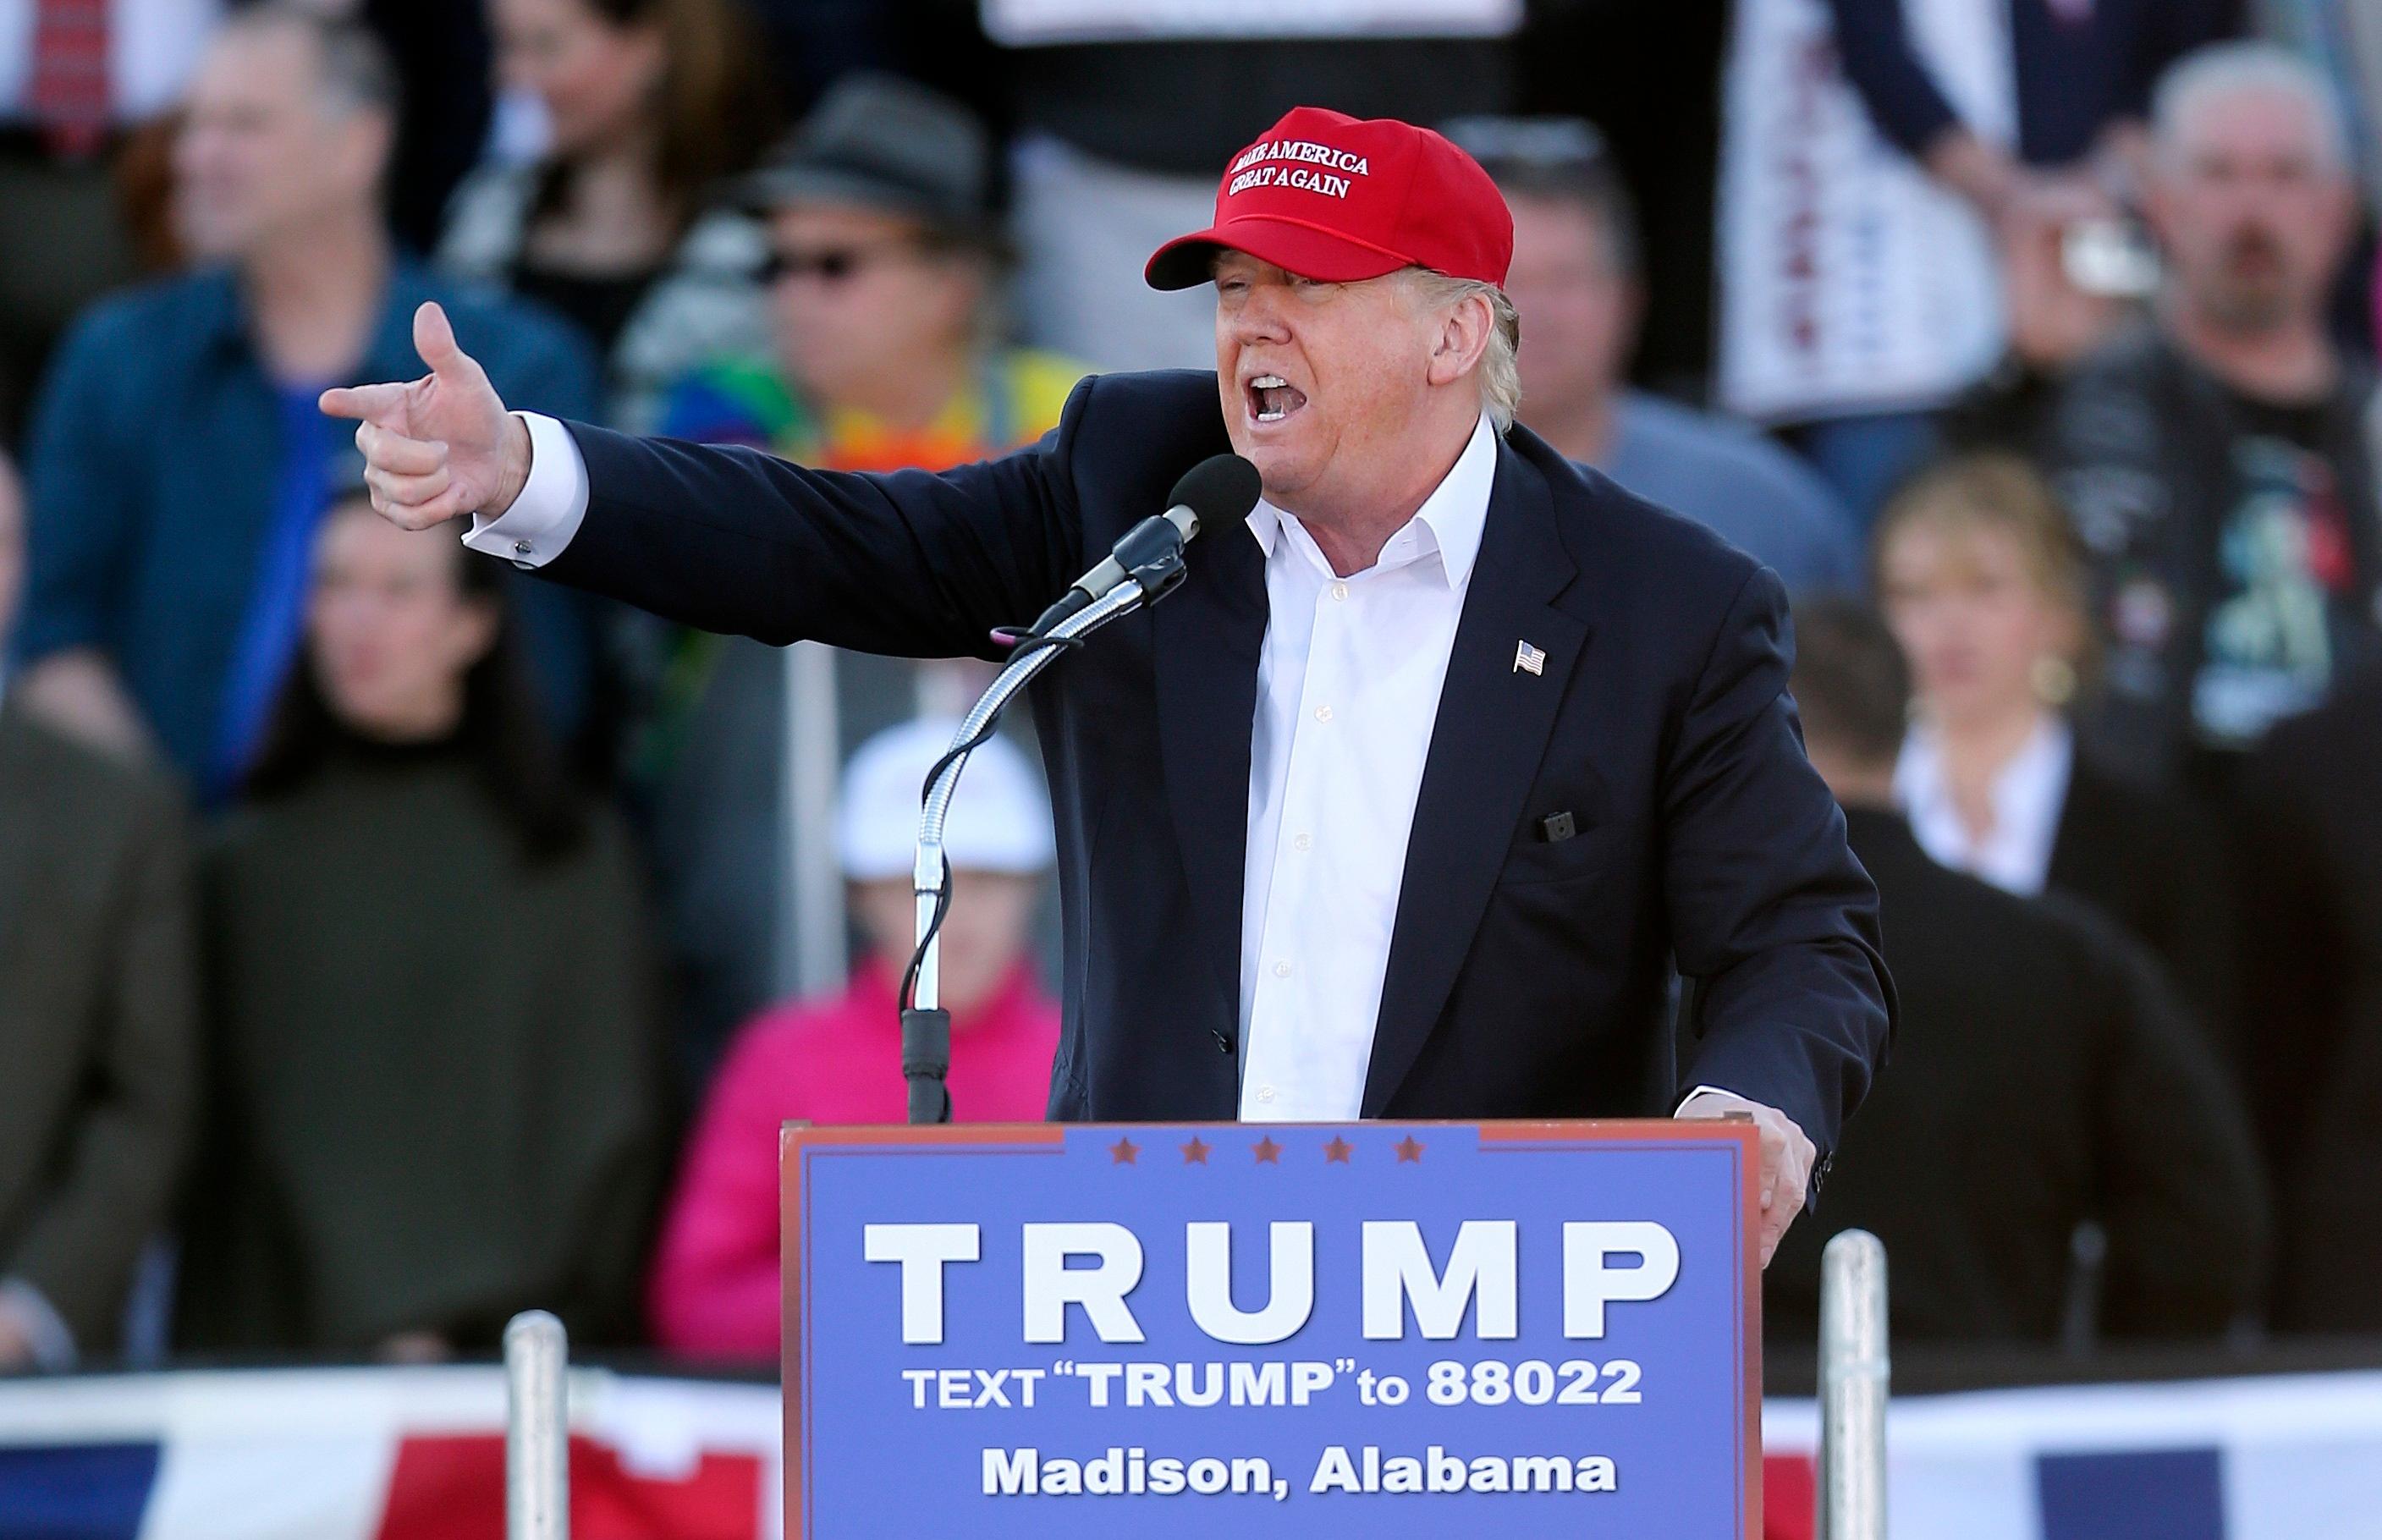 Photo: Donald Trump shooting gesture during speech